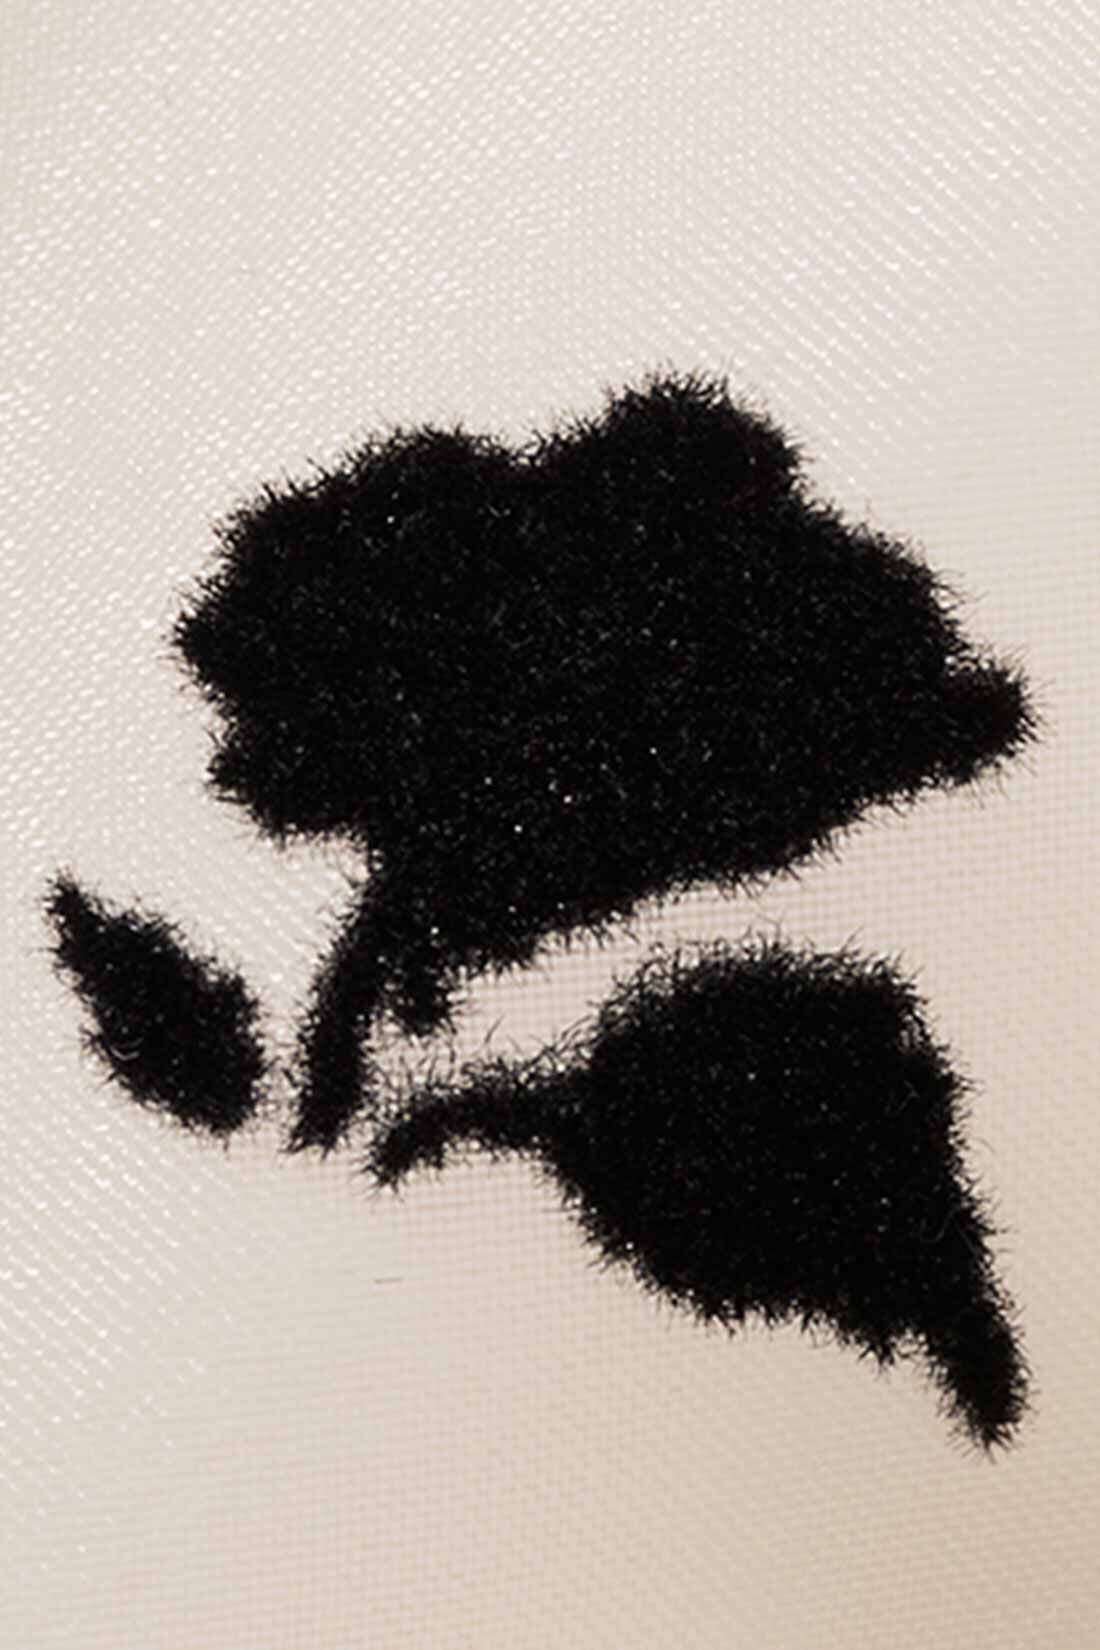 MEDE19F|MEDE19F　Boutique 888さんコラボ オーガンジー素材のフロッキープリントコート〈ベージュ〉|張りと透明感が特徴のオーガンジー素材。花模様はフロッキープリントで立体感あり。